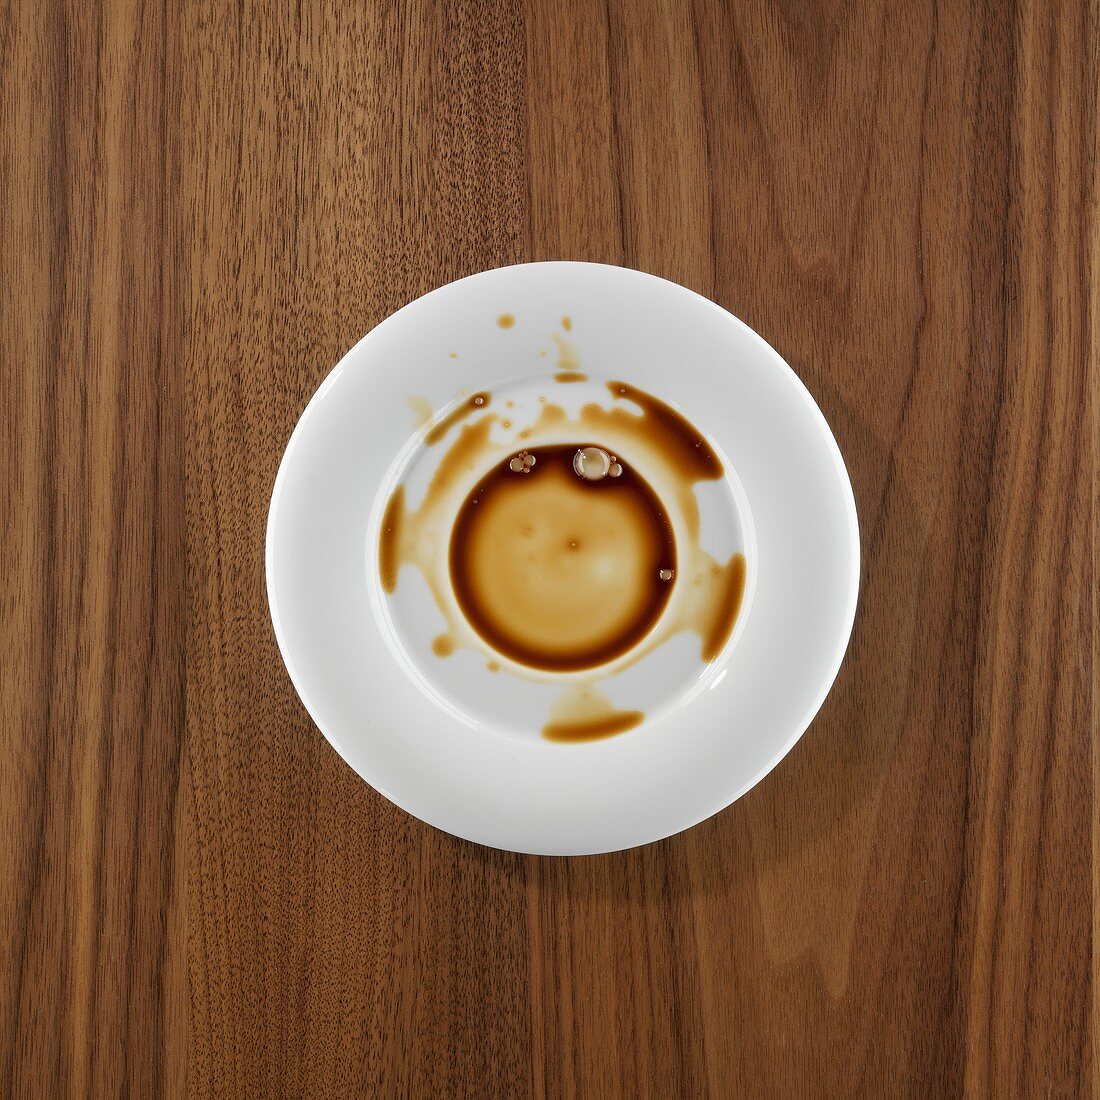 Saucer with spilt coffee